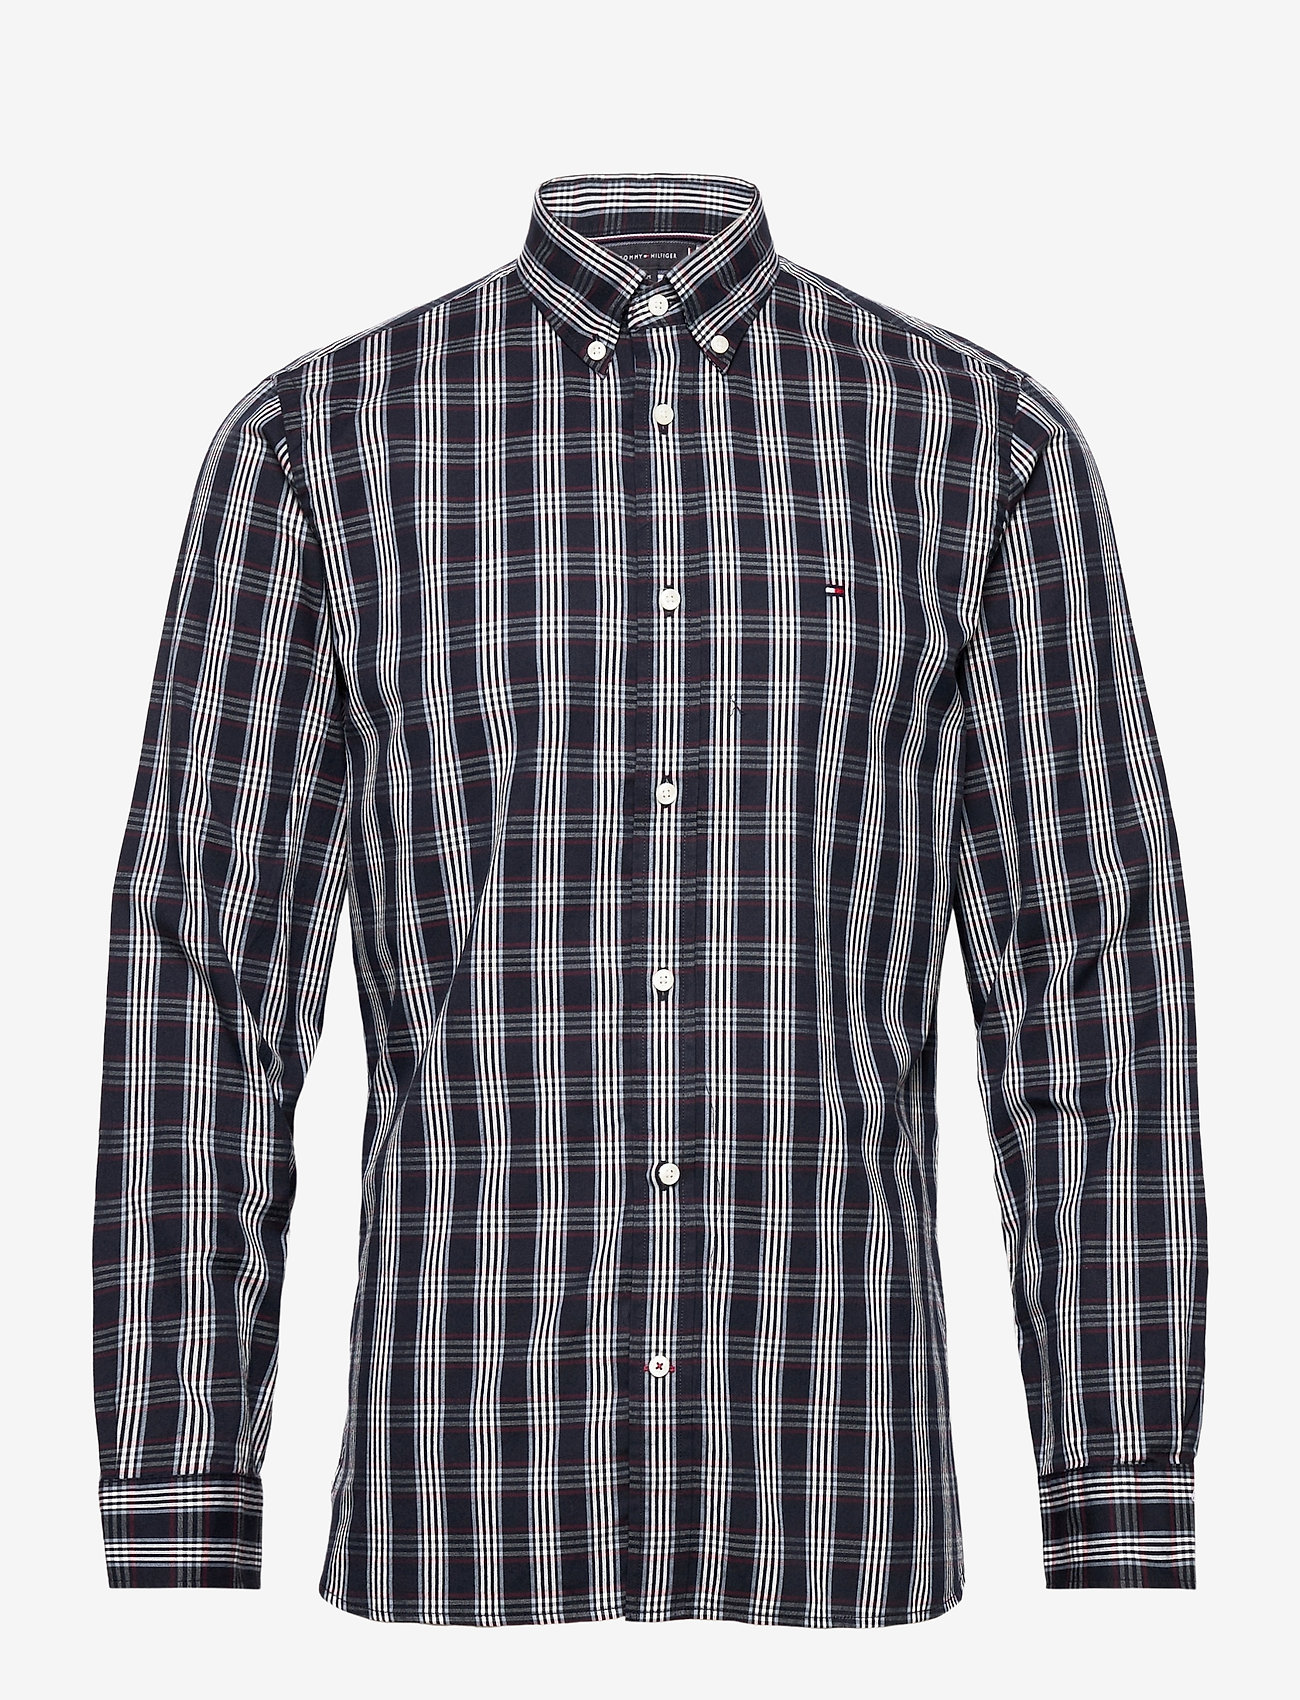 tommy hilfiger checkered shirt